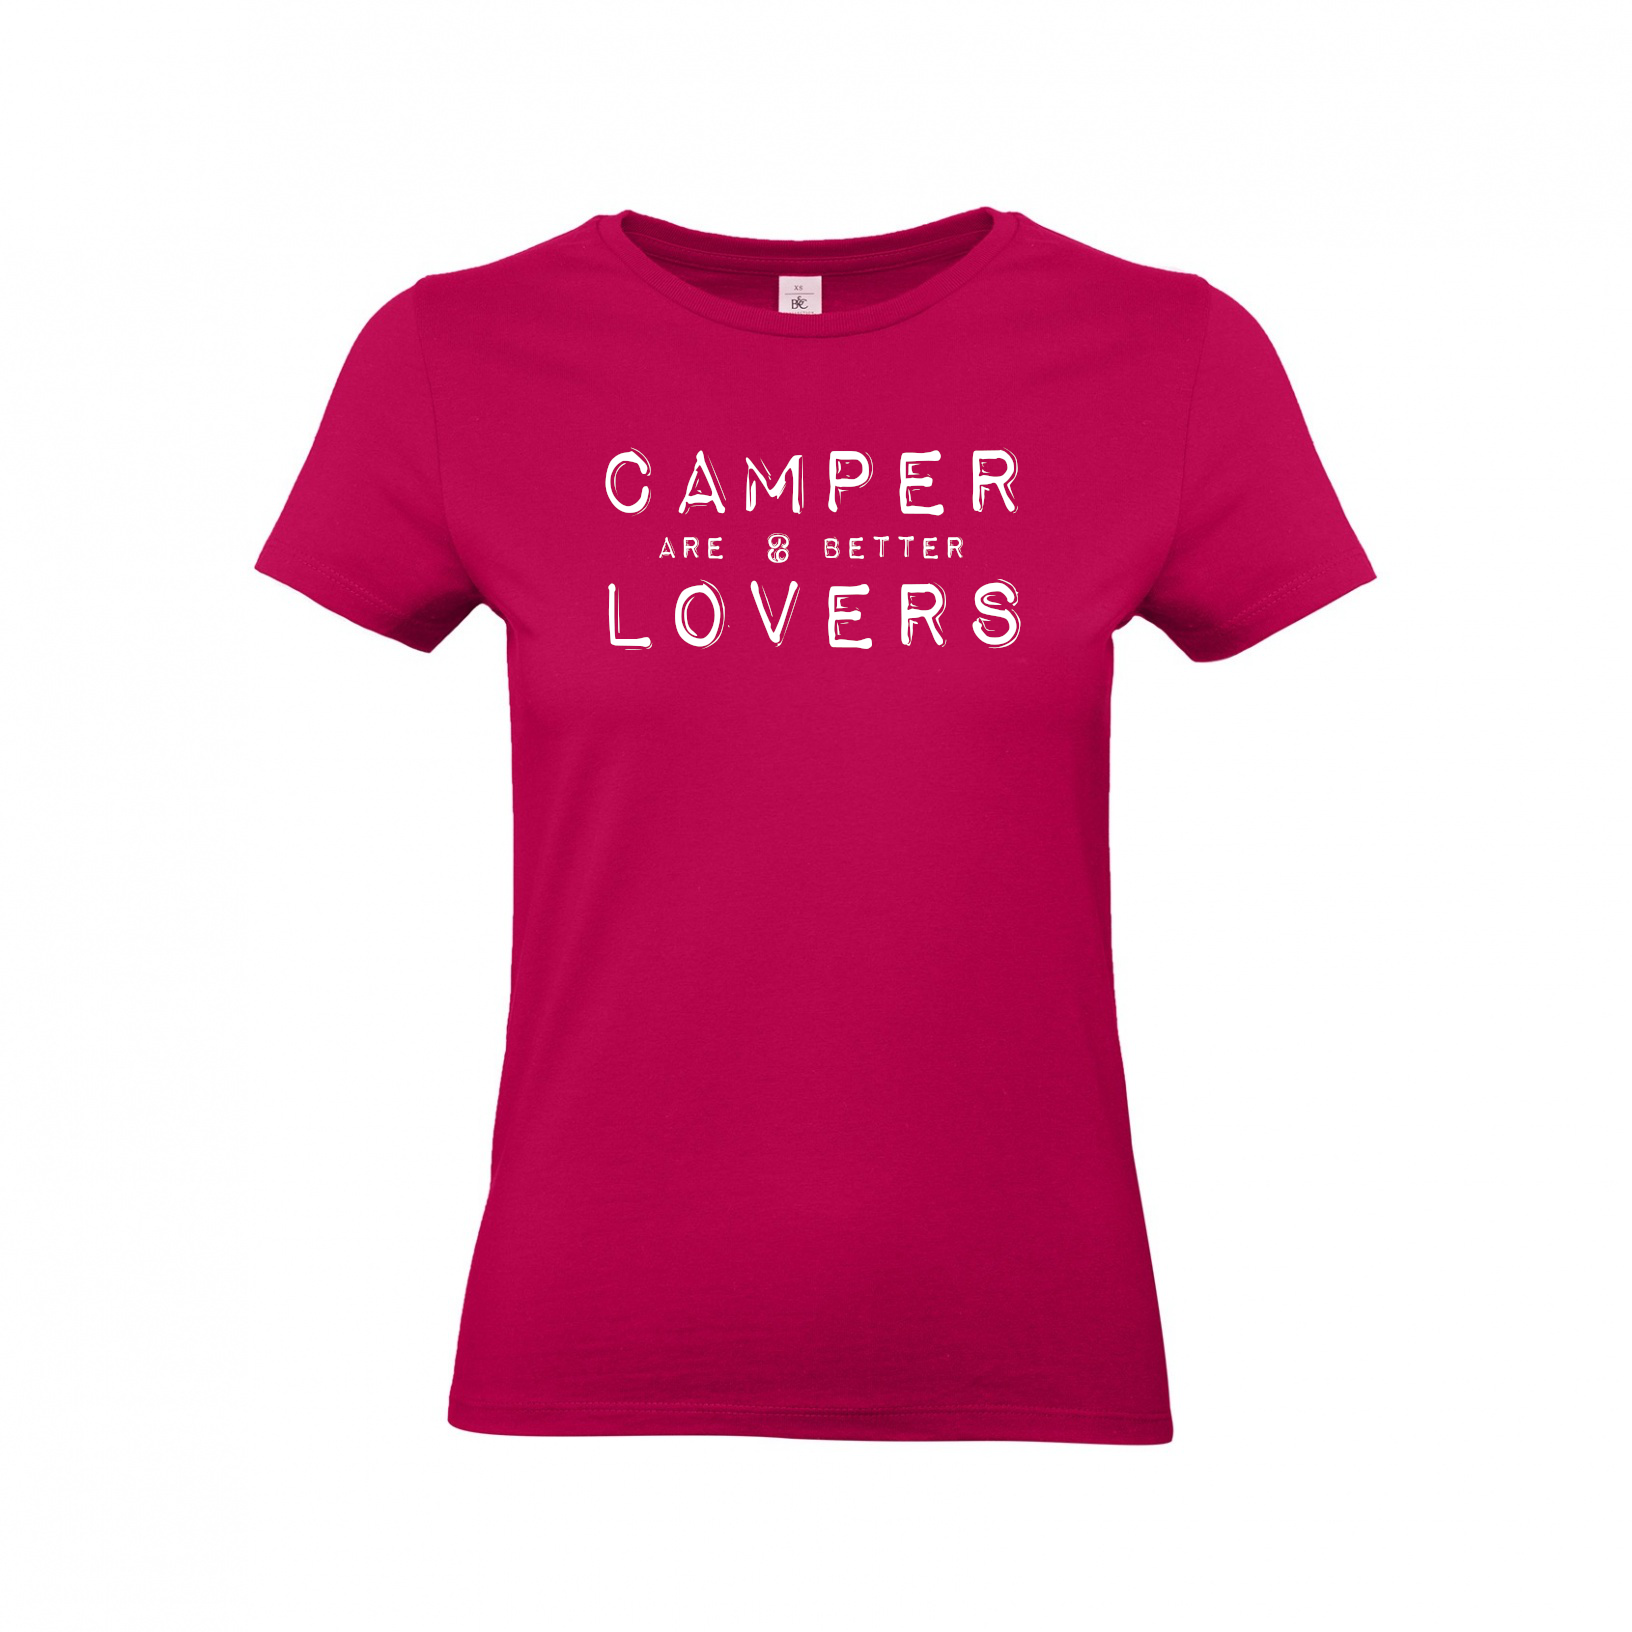 Camper are better lovers - Camping T-Shirt für Frauen